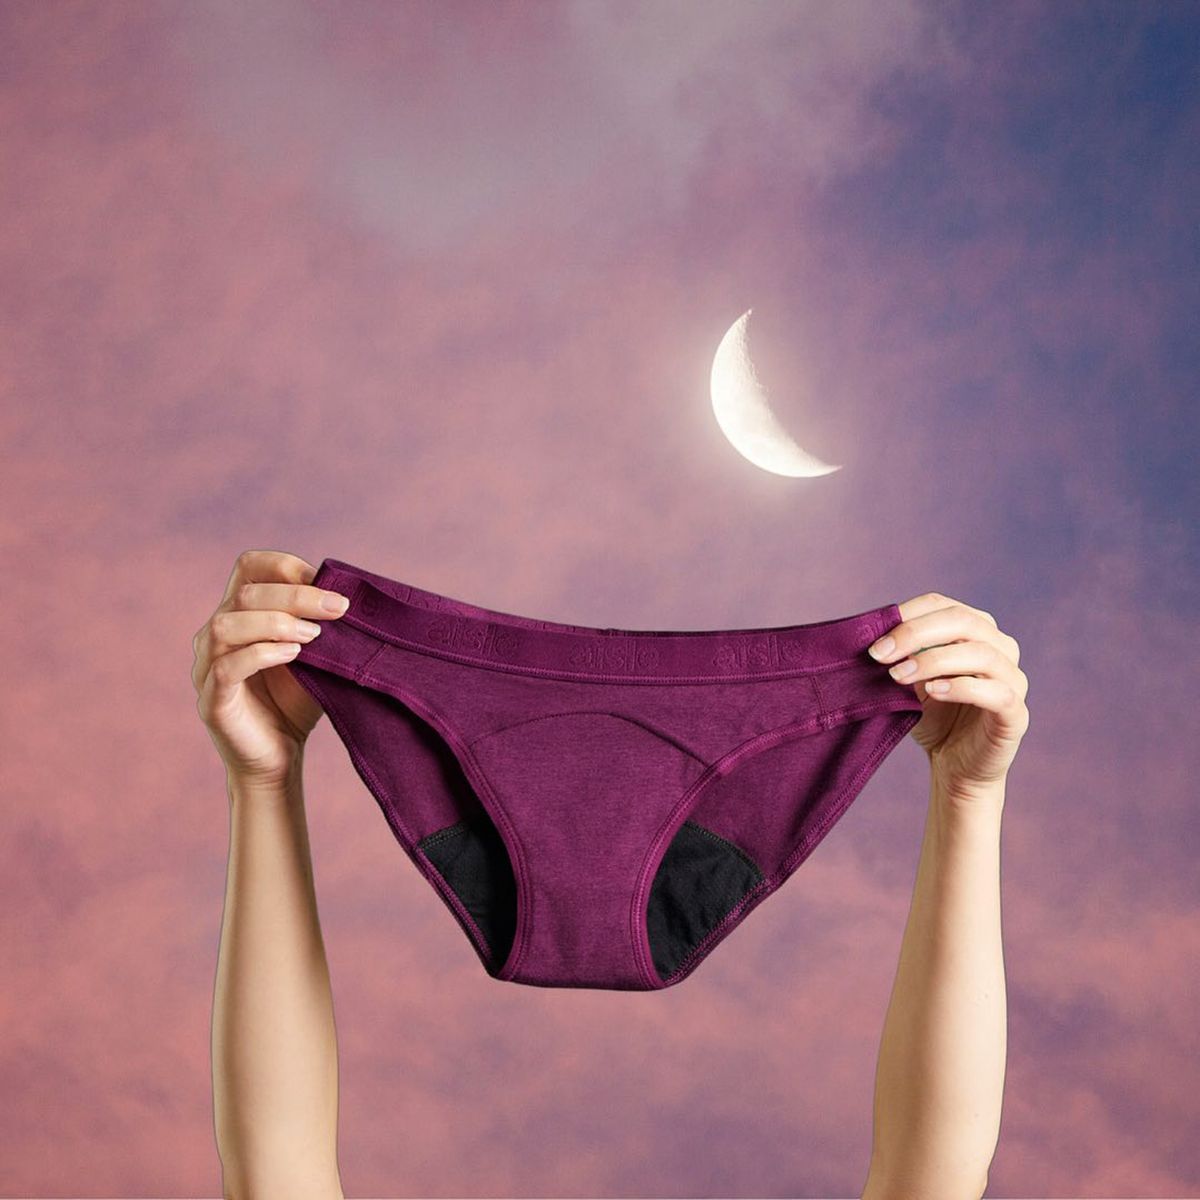 Cotton Underwear for Women Color Block Comfy Lingerie Bikini Ultra